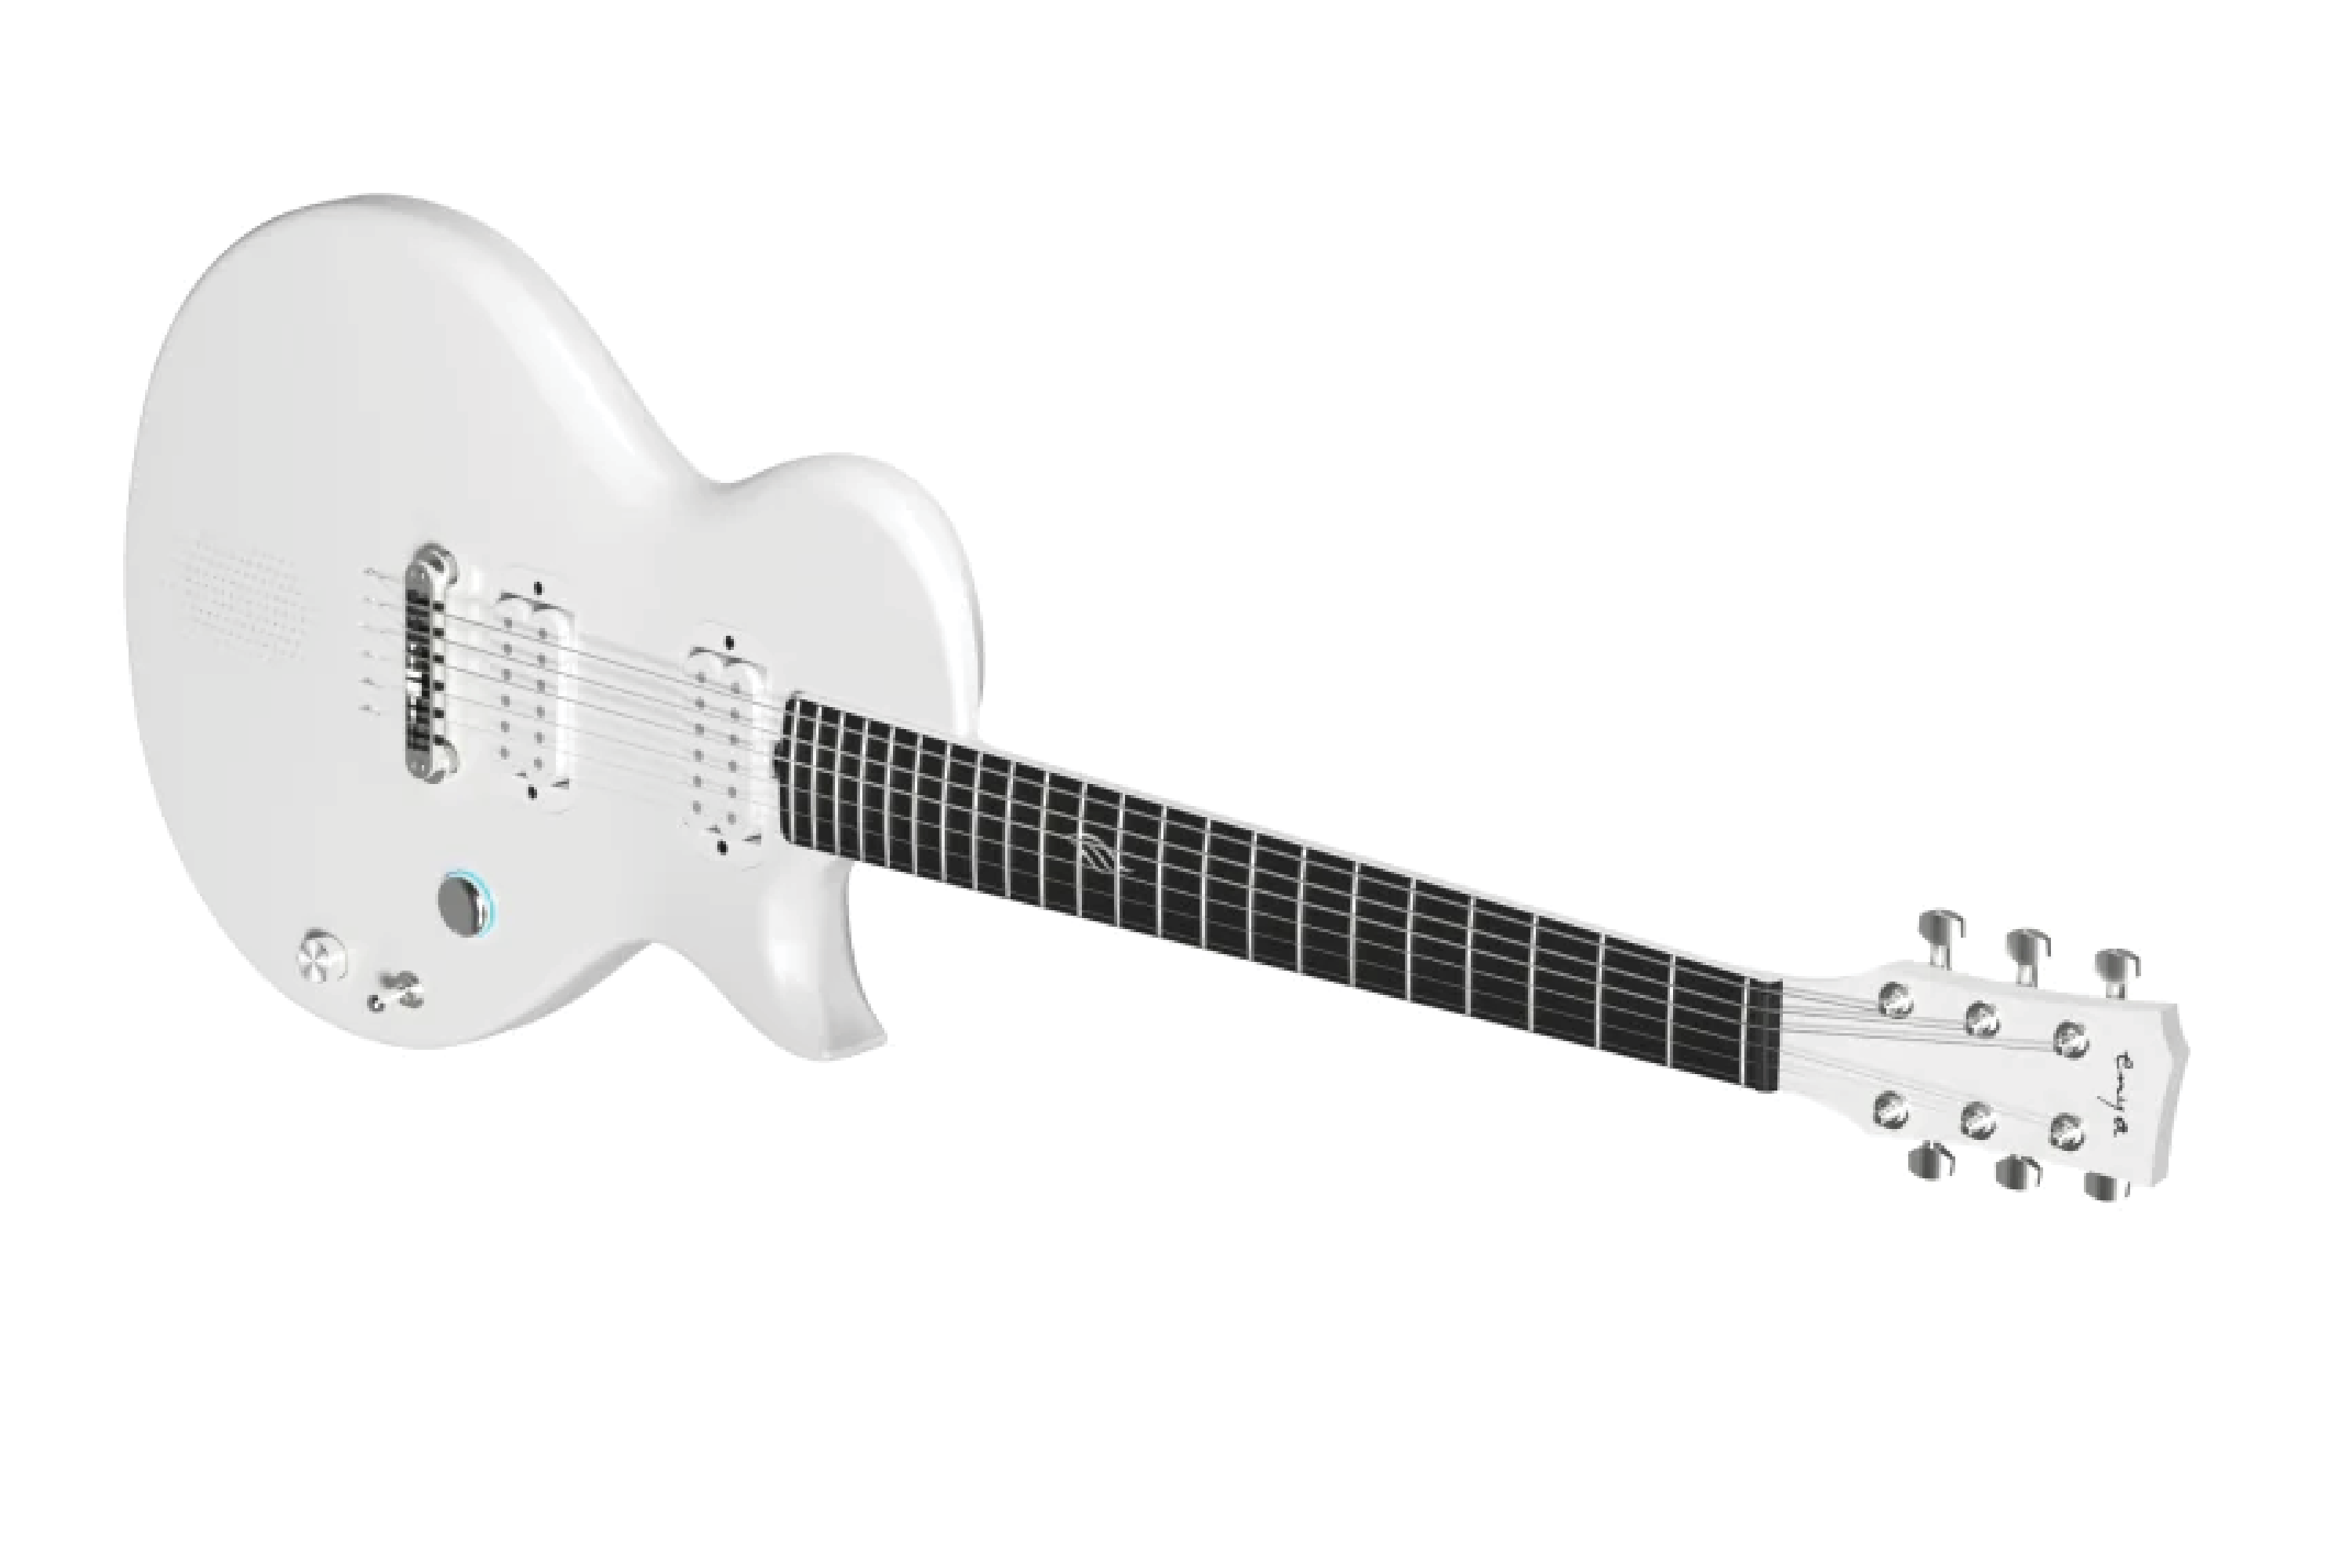 Enya Nova Go Sonic Smart Electric Guitar - White